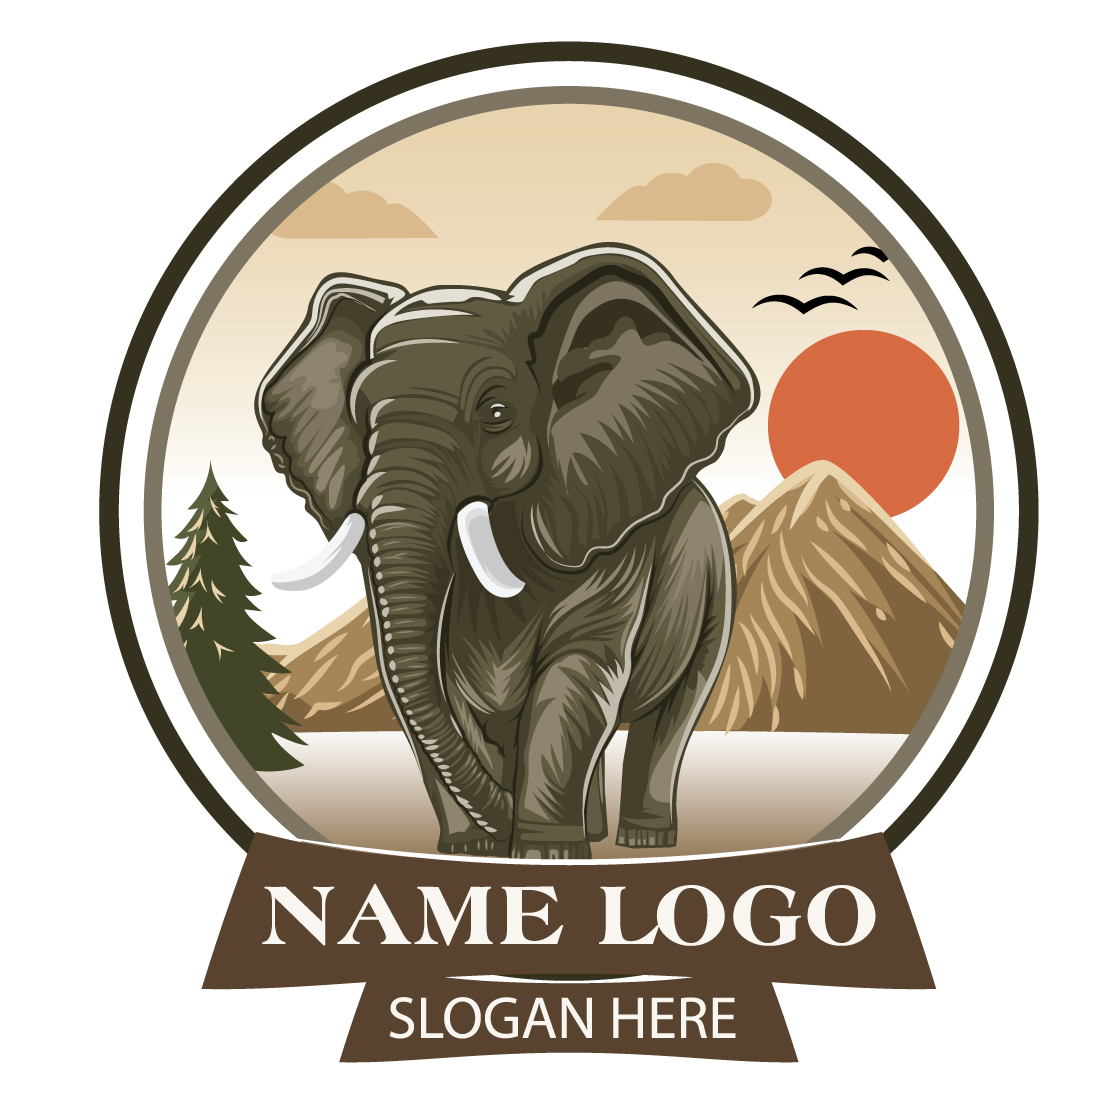 geometric logo art portrait illustration, a colorful art piece, illustration with vertebrate elephant preview image.